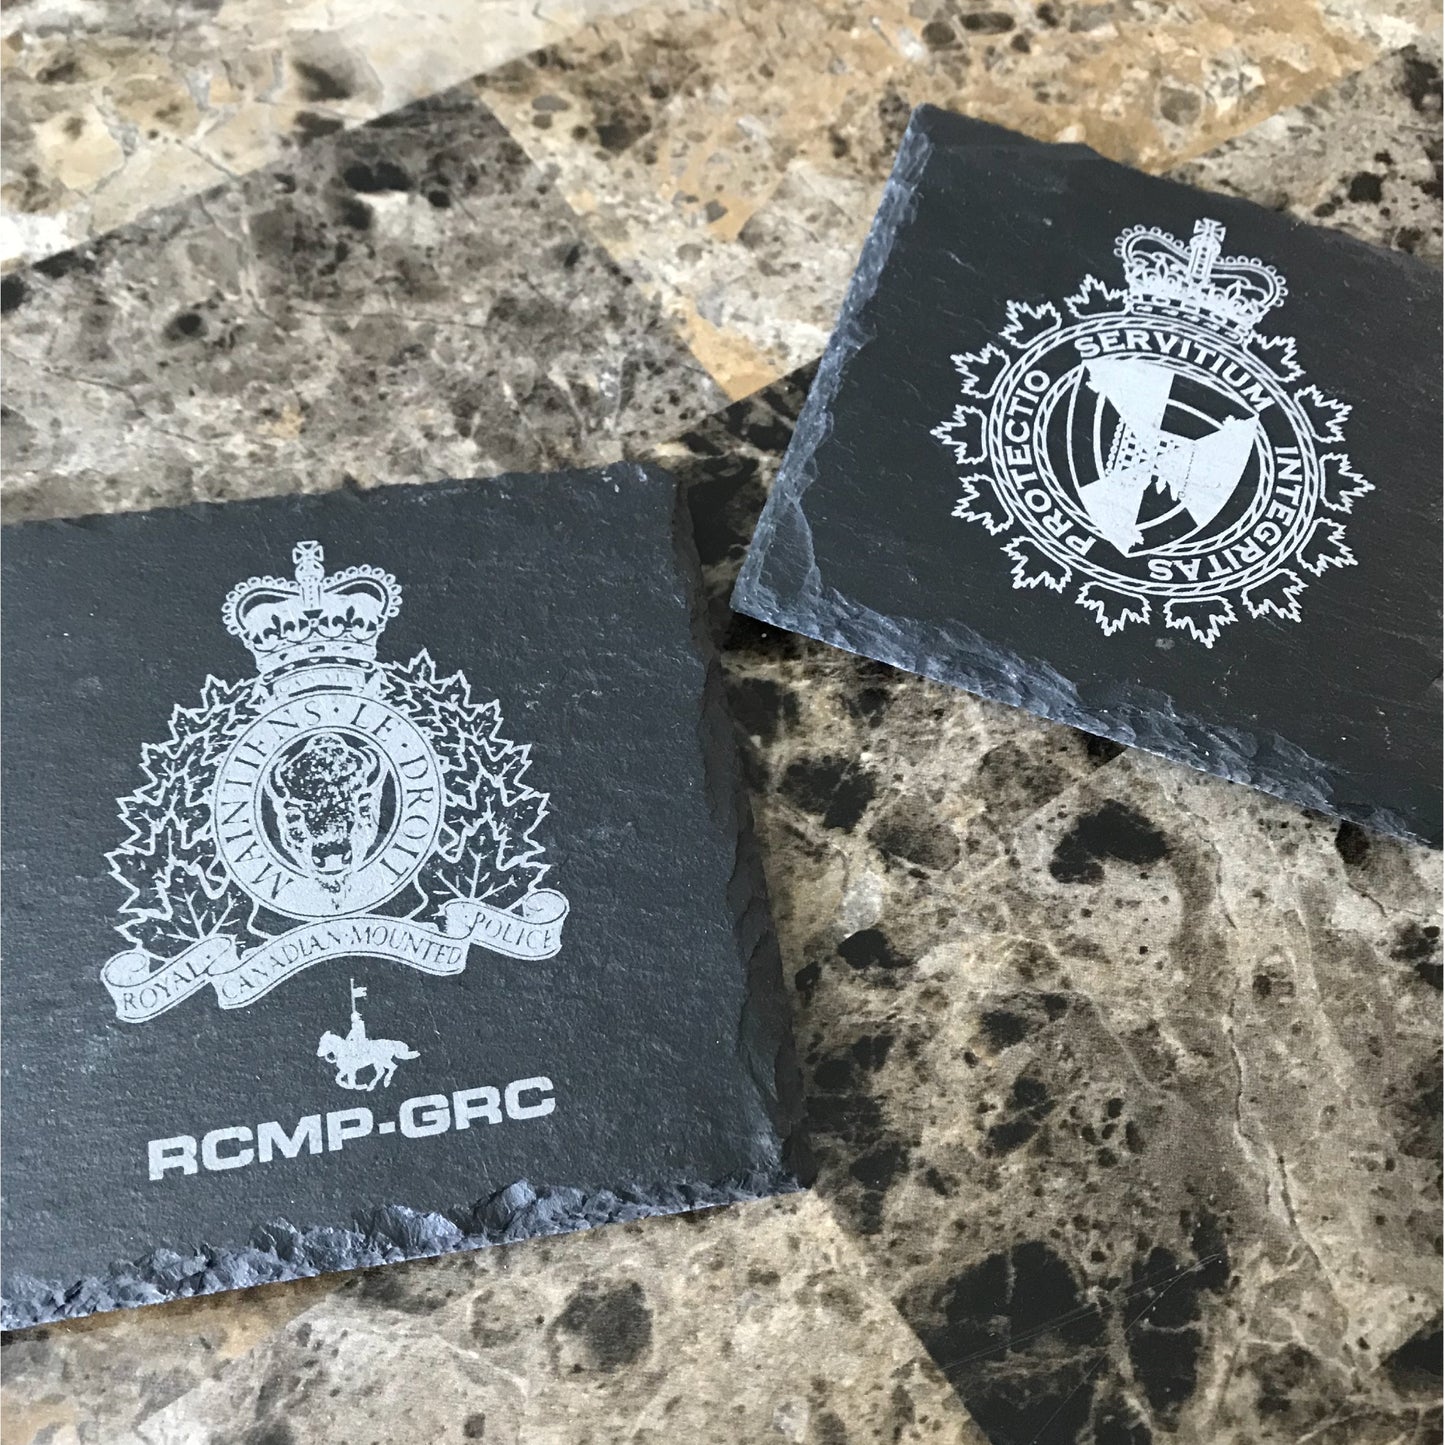 Ontario Corrections Stone Slate Coasters-911 Duty Gear-911 Duty Gear Canada